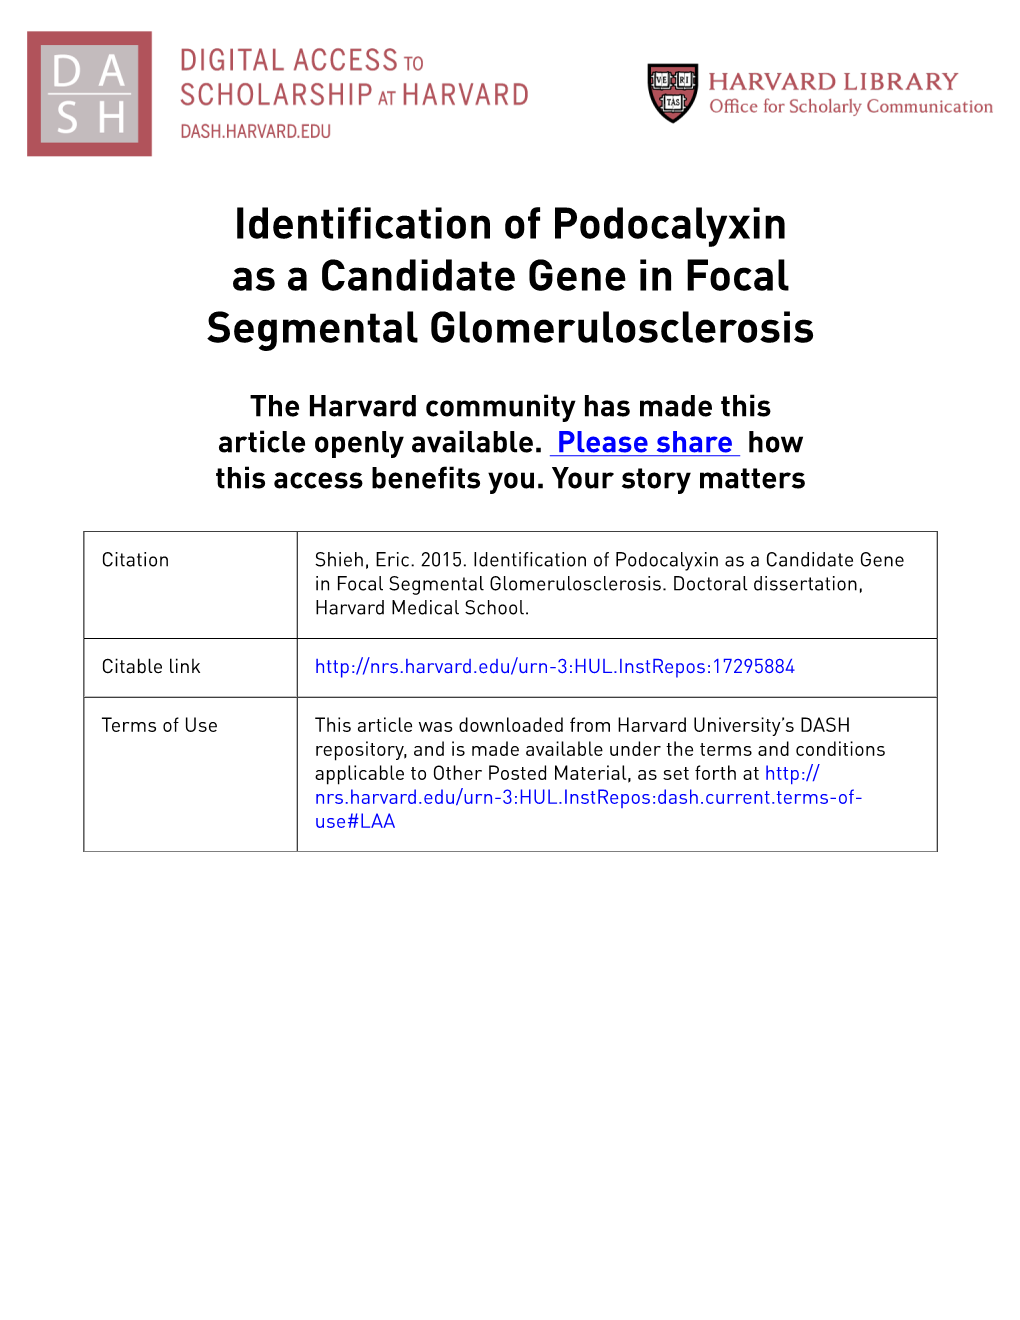 Identification of Podocalyxin As a Candidate Gene in Focal Segmental Glomerulosclerosis